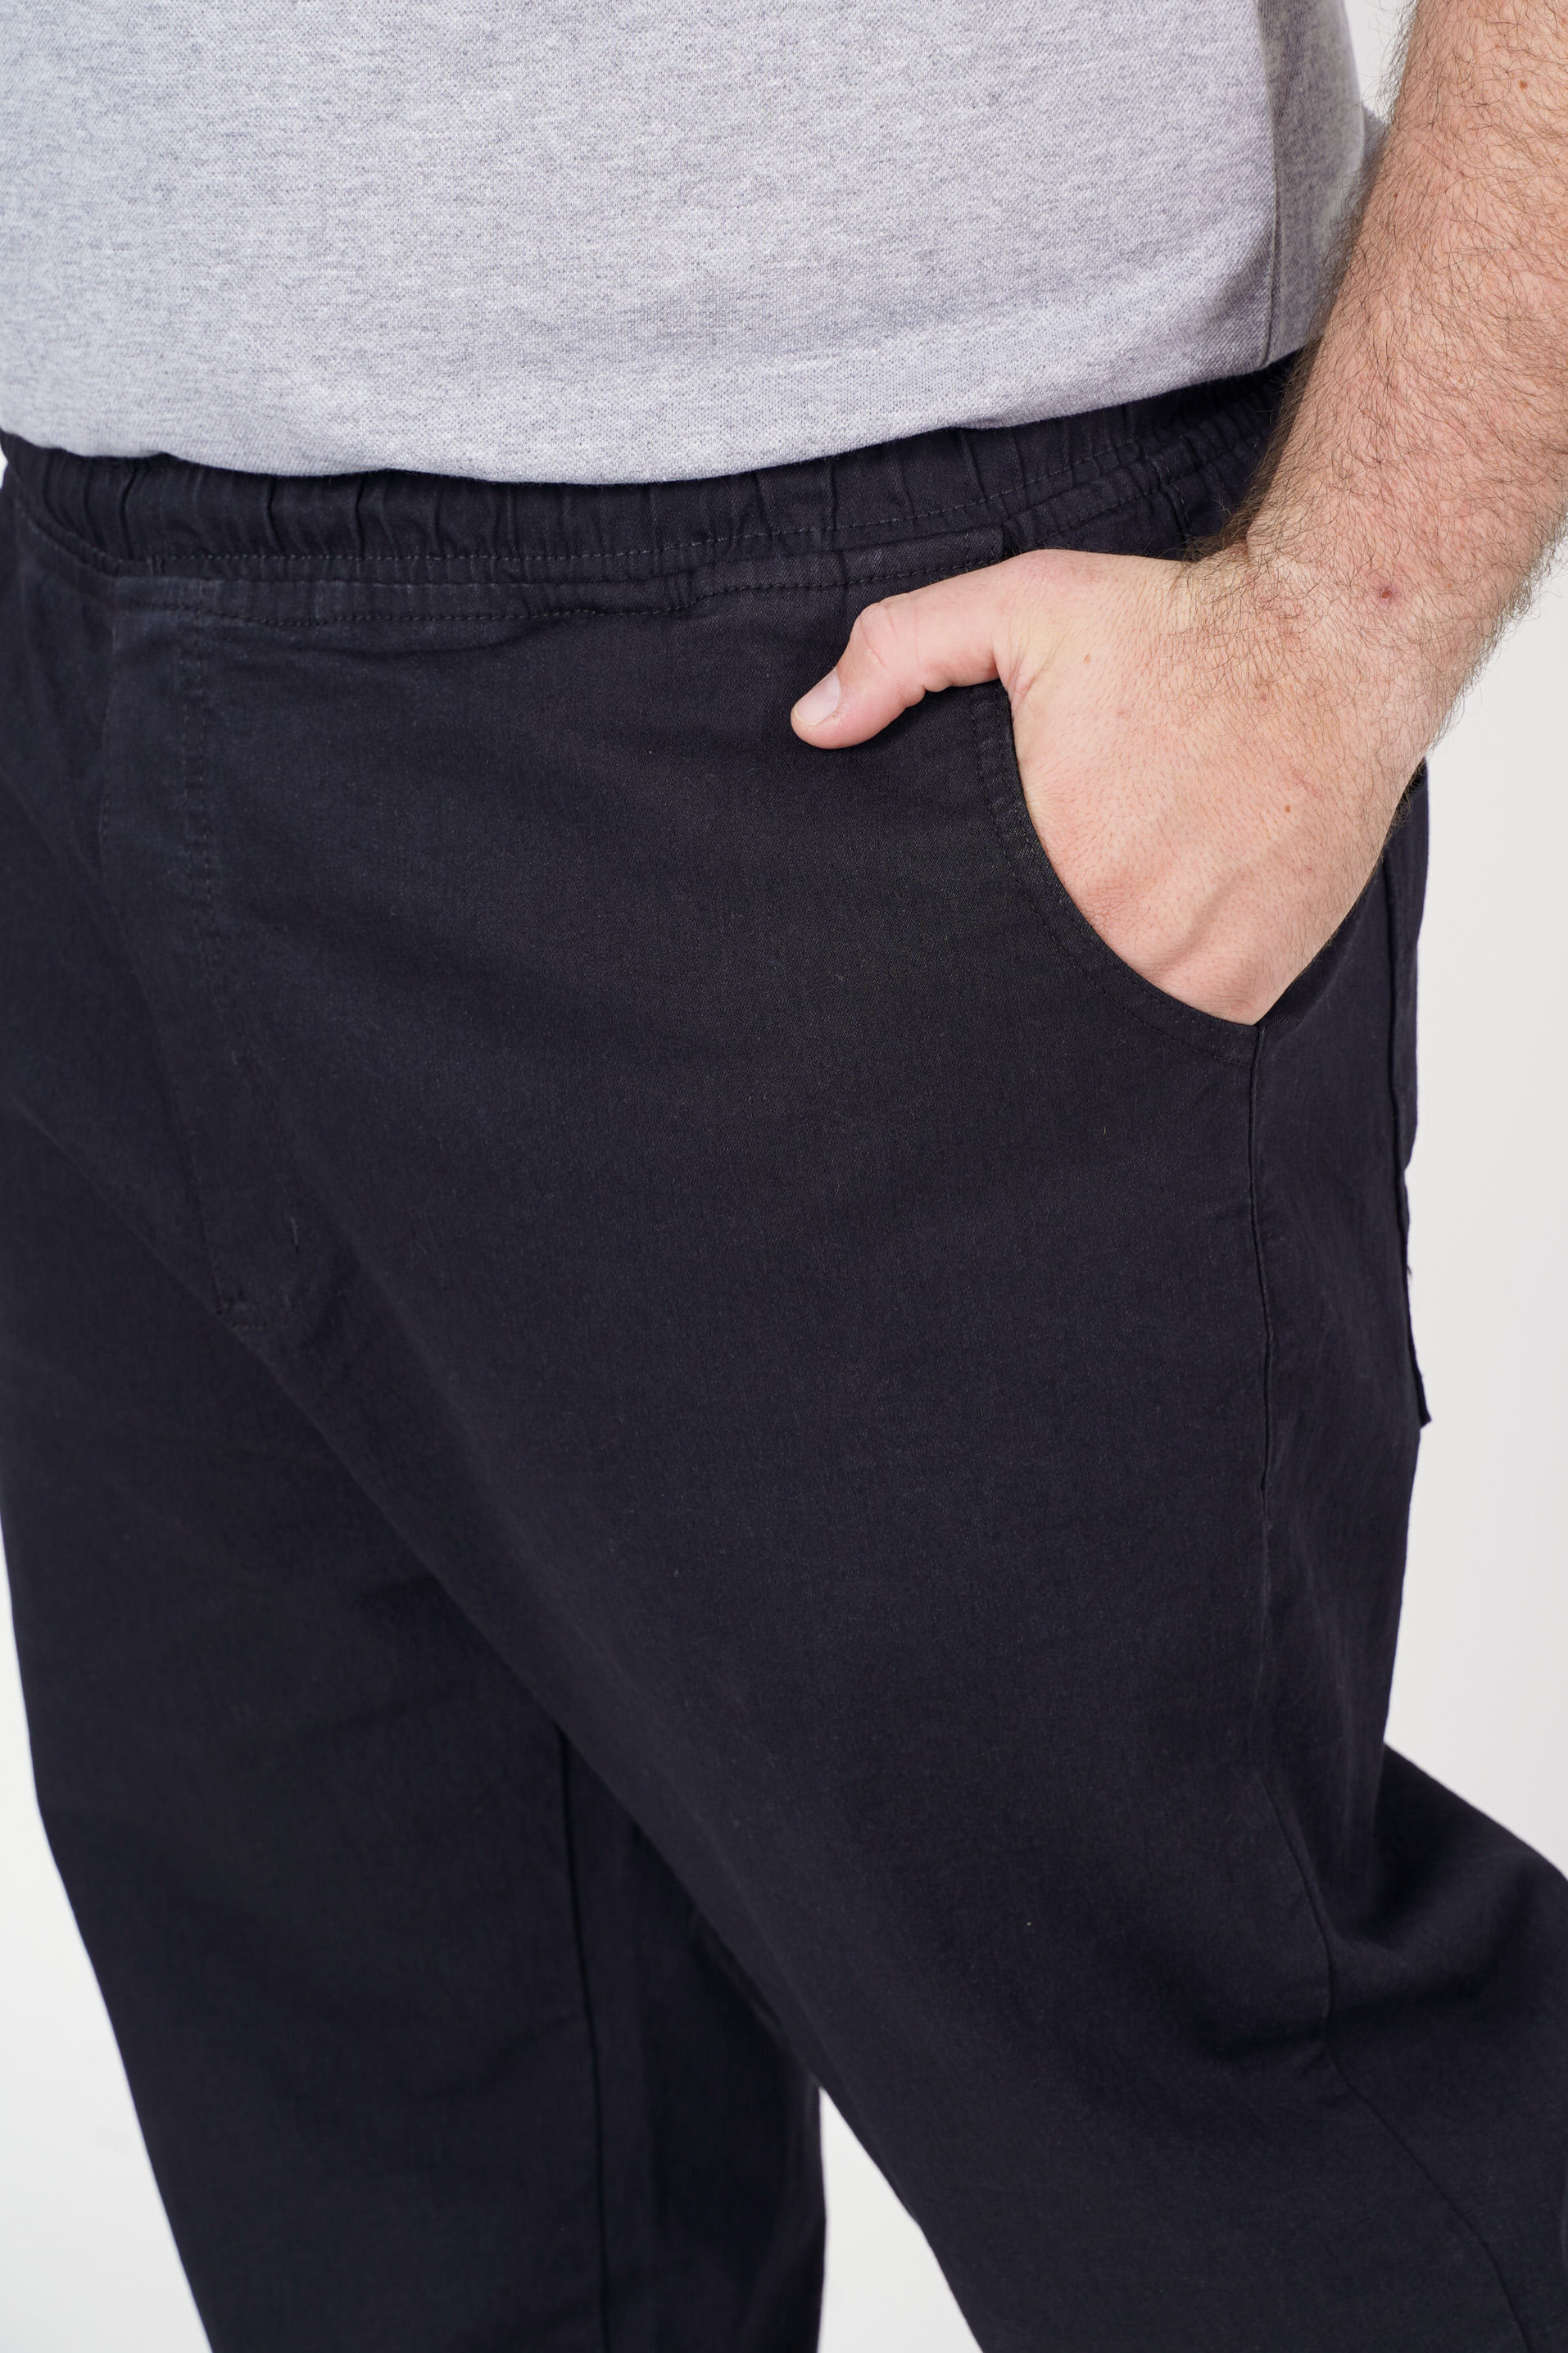 Calca-black-jeans-com-cos-de-elastico-plus-size